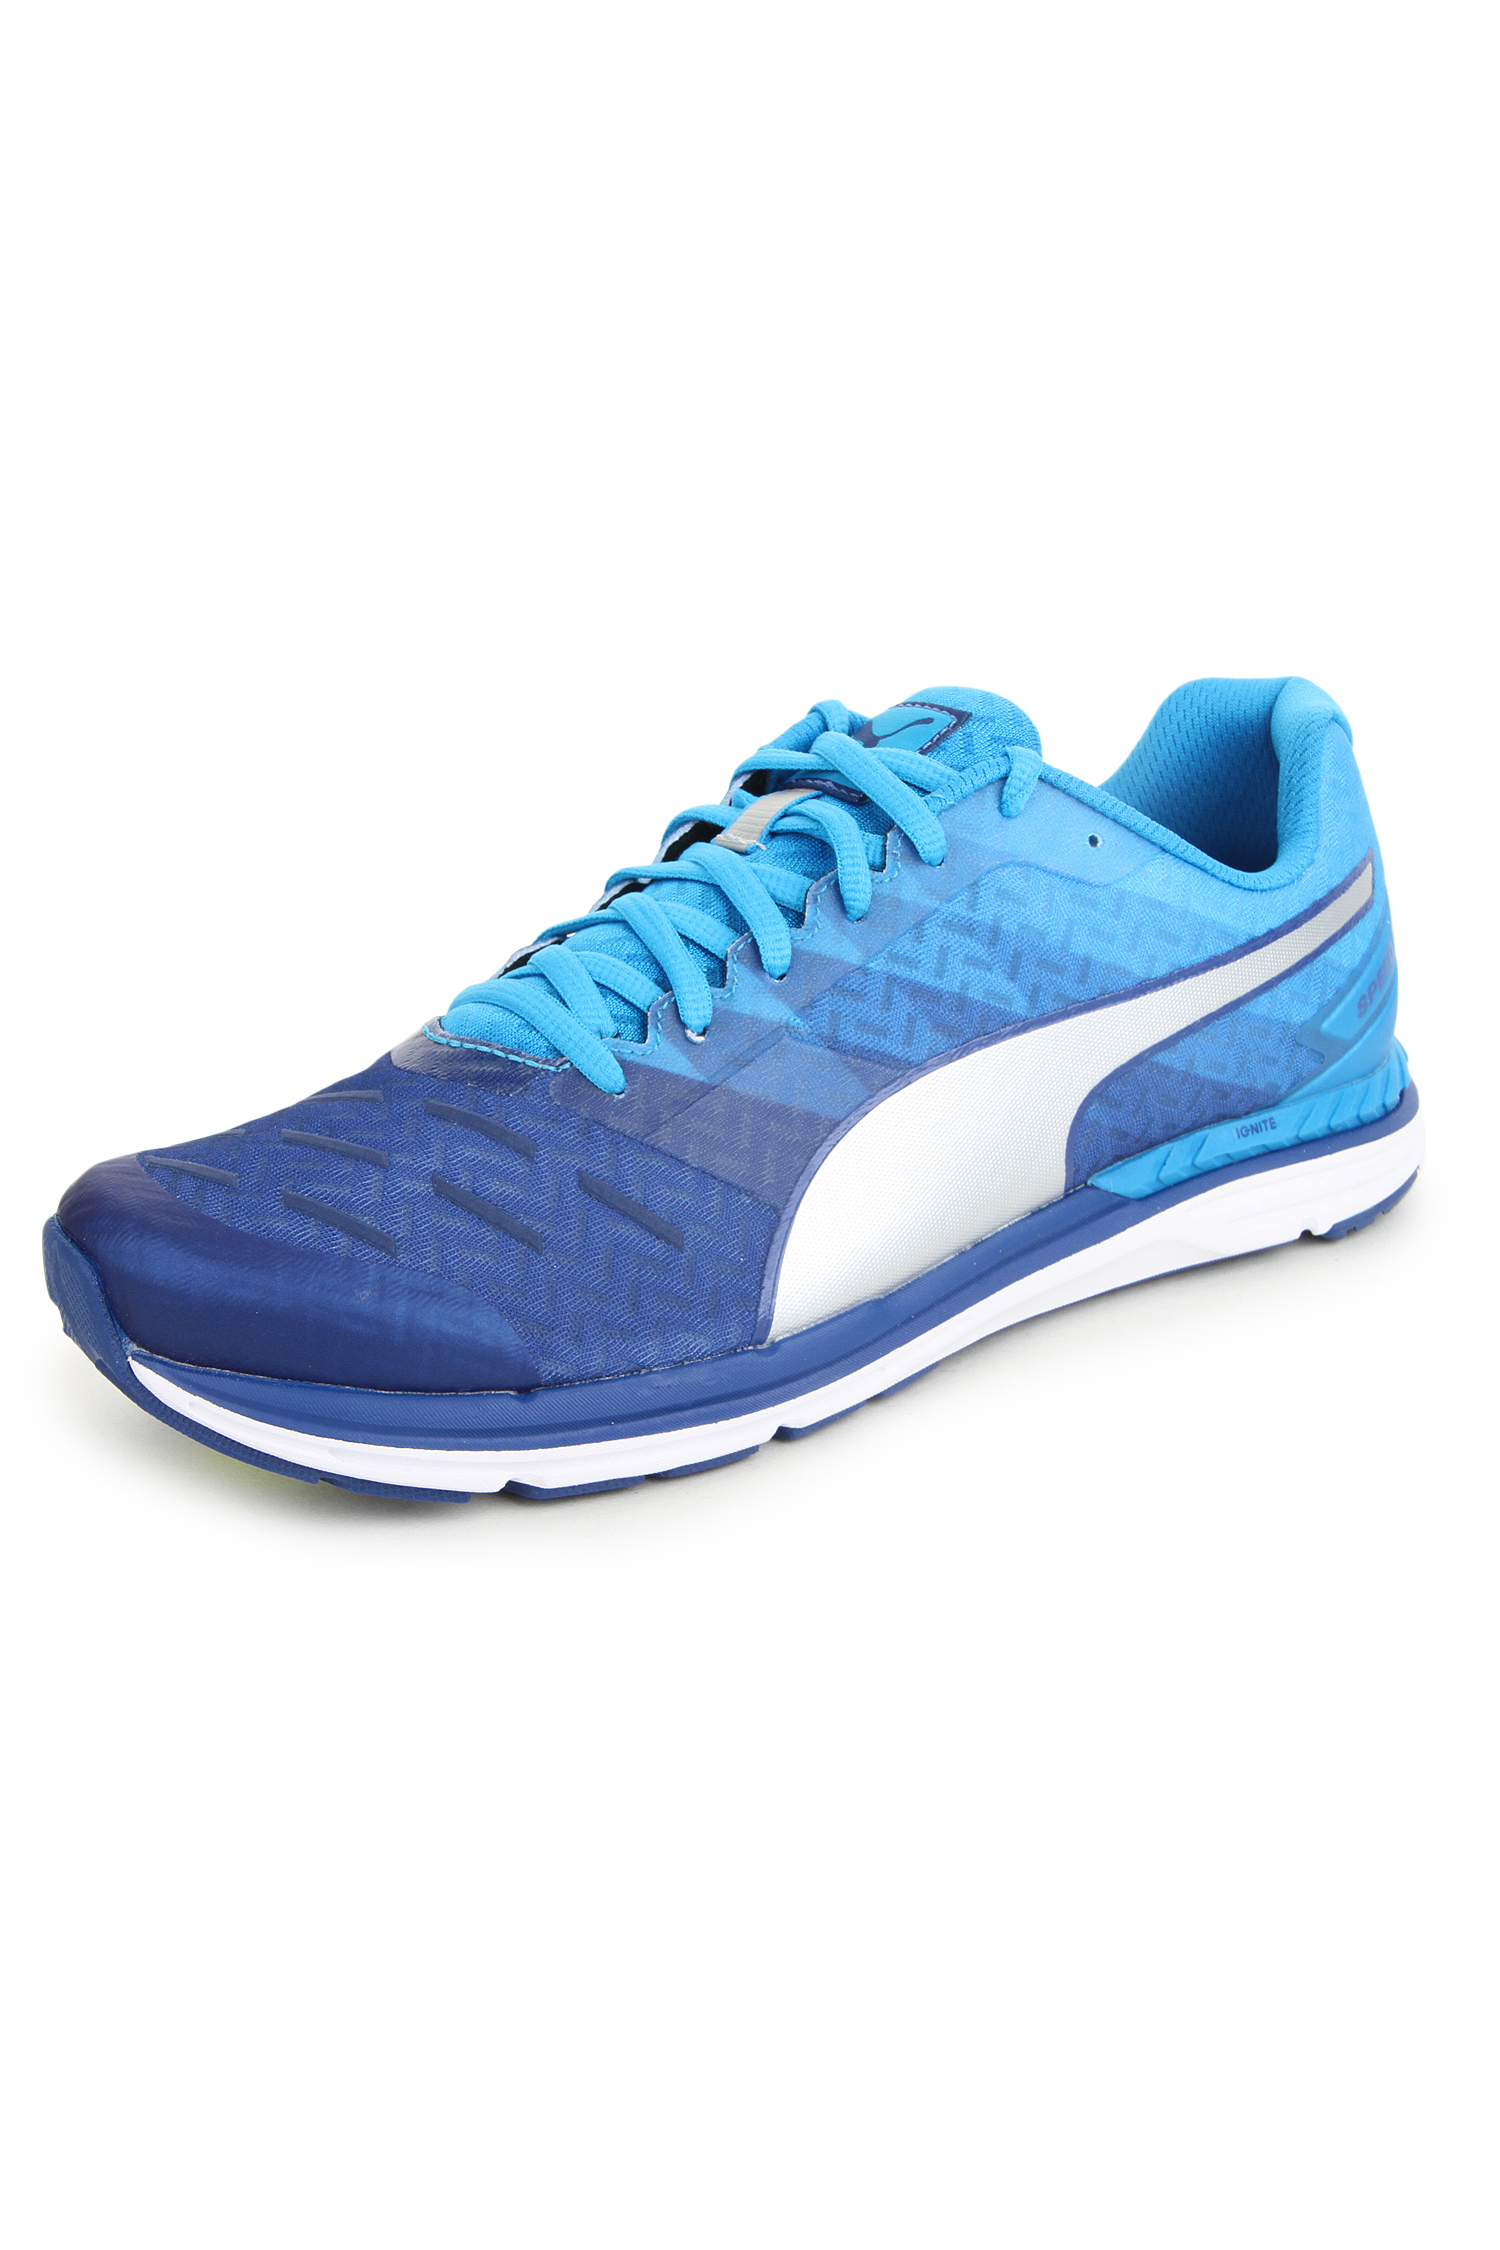 Buy Puma Men'S Speed 300 IGNITE Blue Mesh Running Shoes Online @ ₹8499 ...